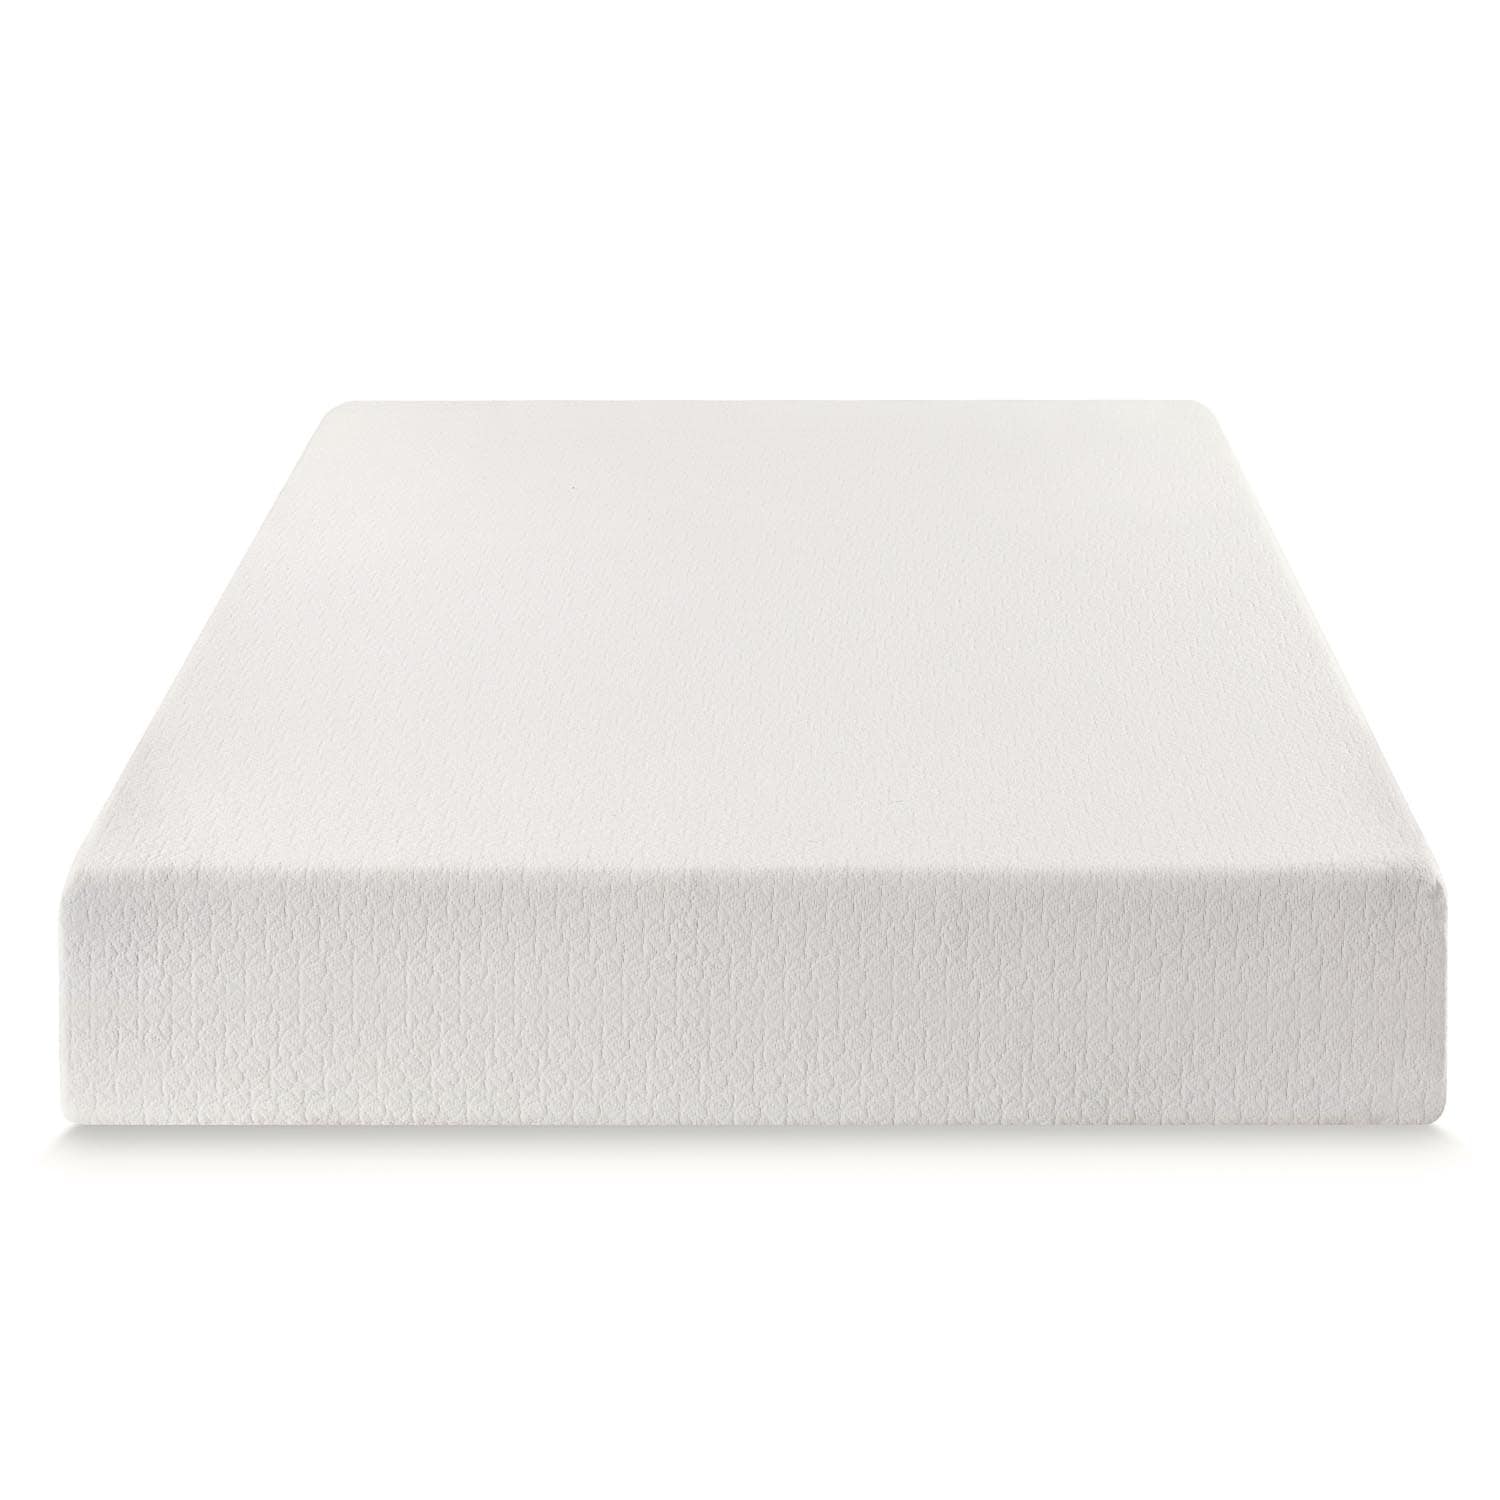 12 Inch Memory Foam Mattress By Crown Comfort - On Sale - Bed Bath